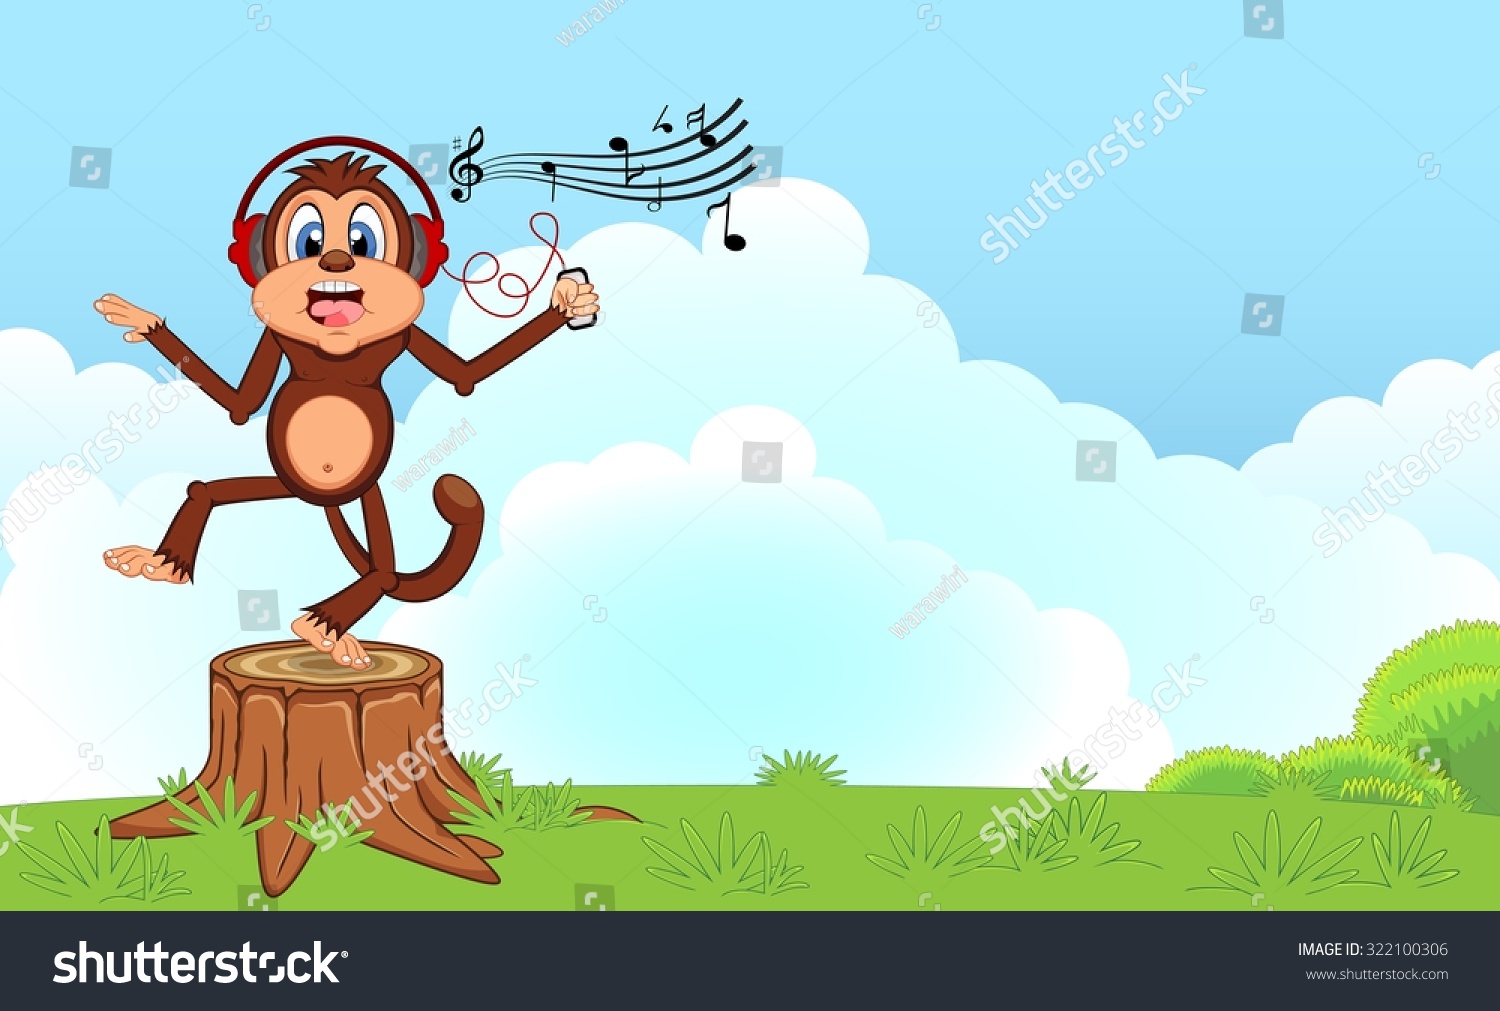 A chimp can sing. Танцующая обезьянка. Обезьяна танцует. Танец мартышек. Обезьяна с музыкальными кругами.